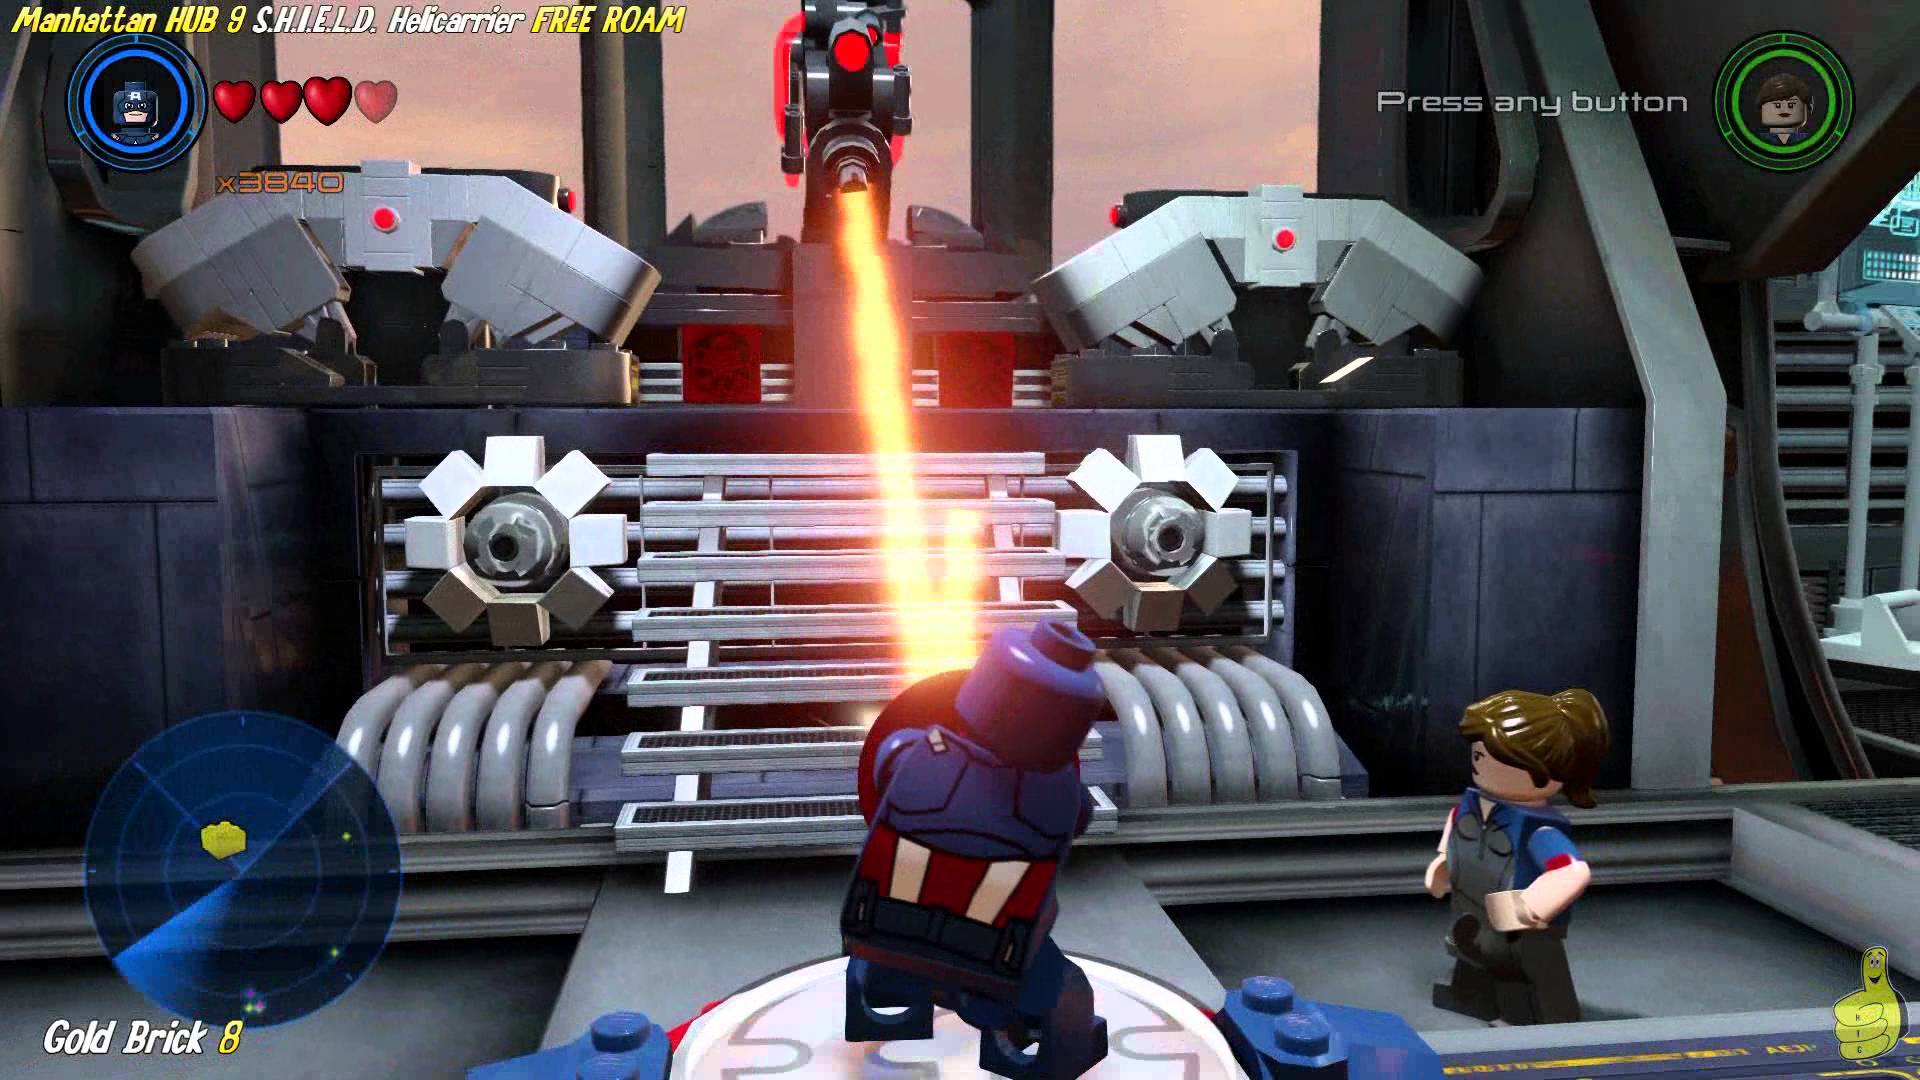 Lego Marvel Avengers: Manhattan HUB 9 / S.H.I.E.L.D. Helicarrier FREE ROAM (All Collectibles) – HTG